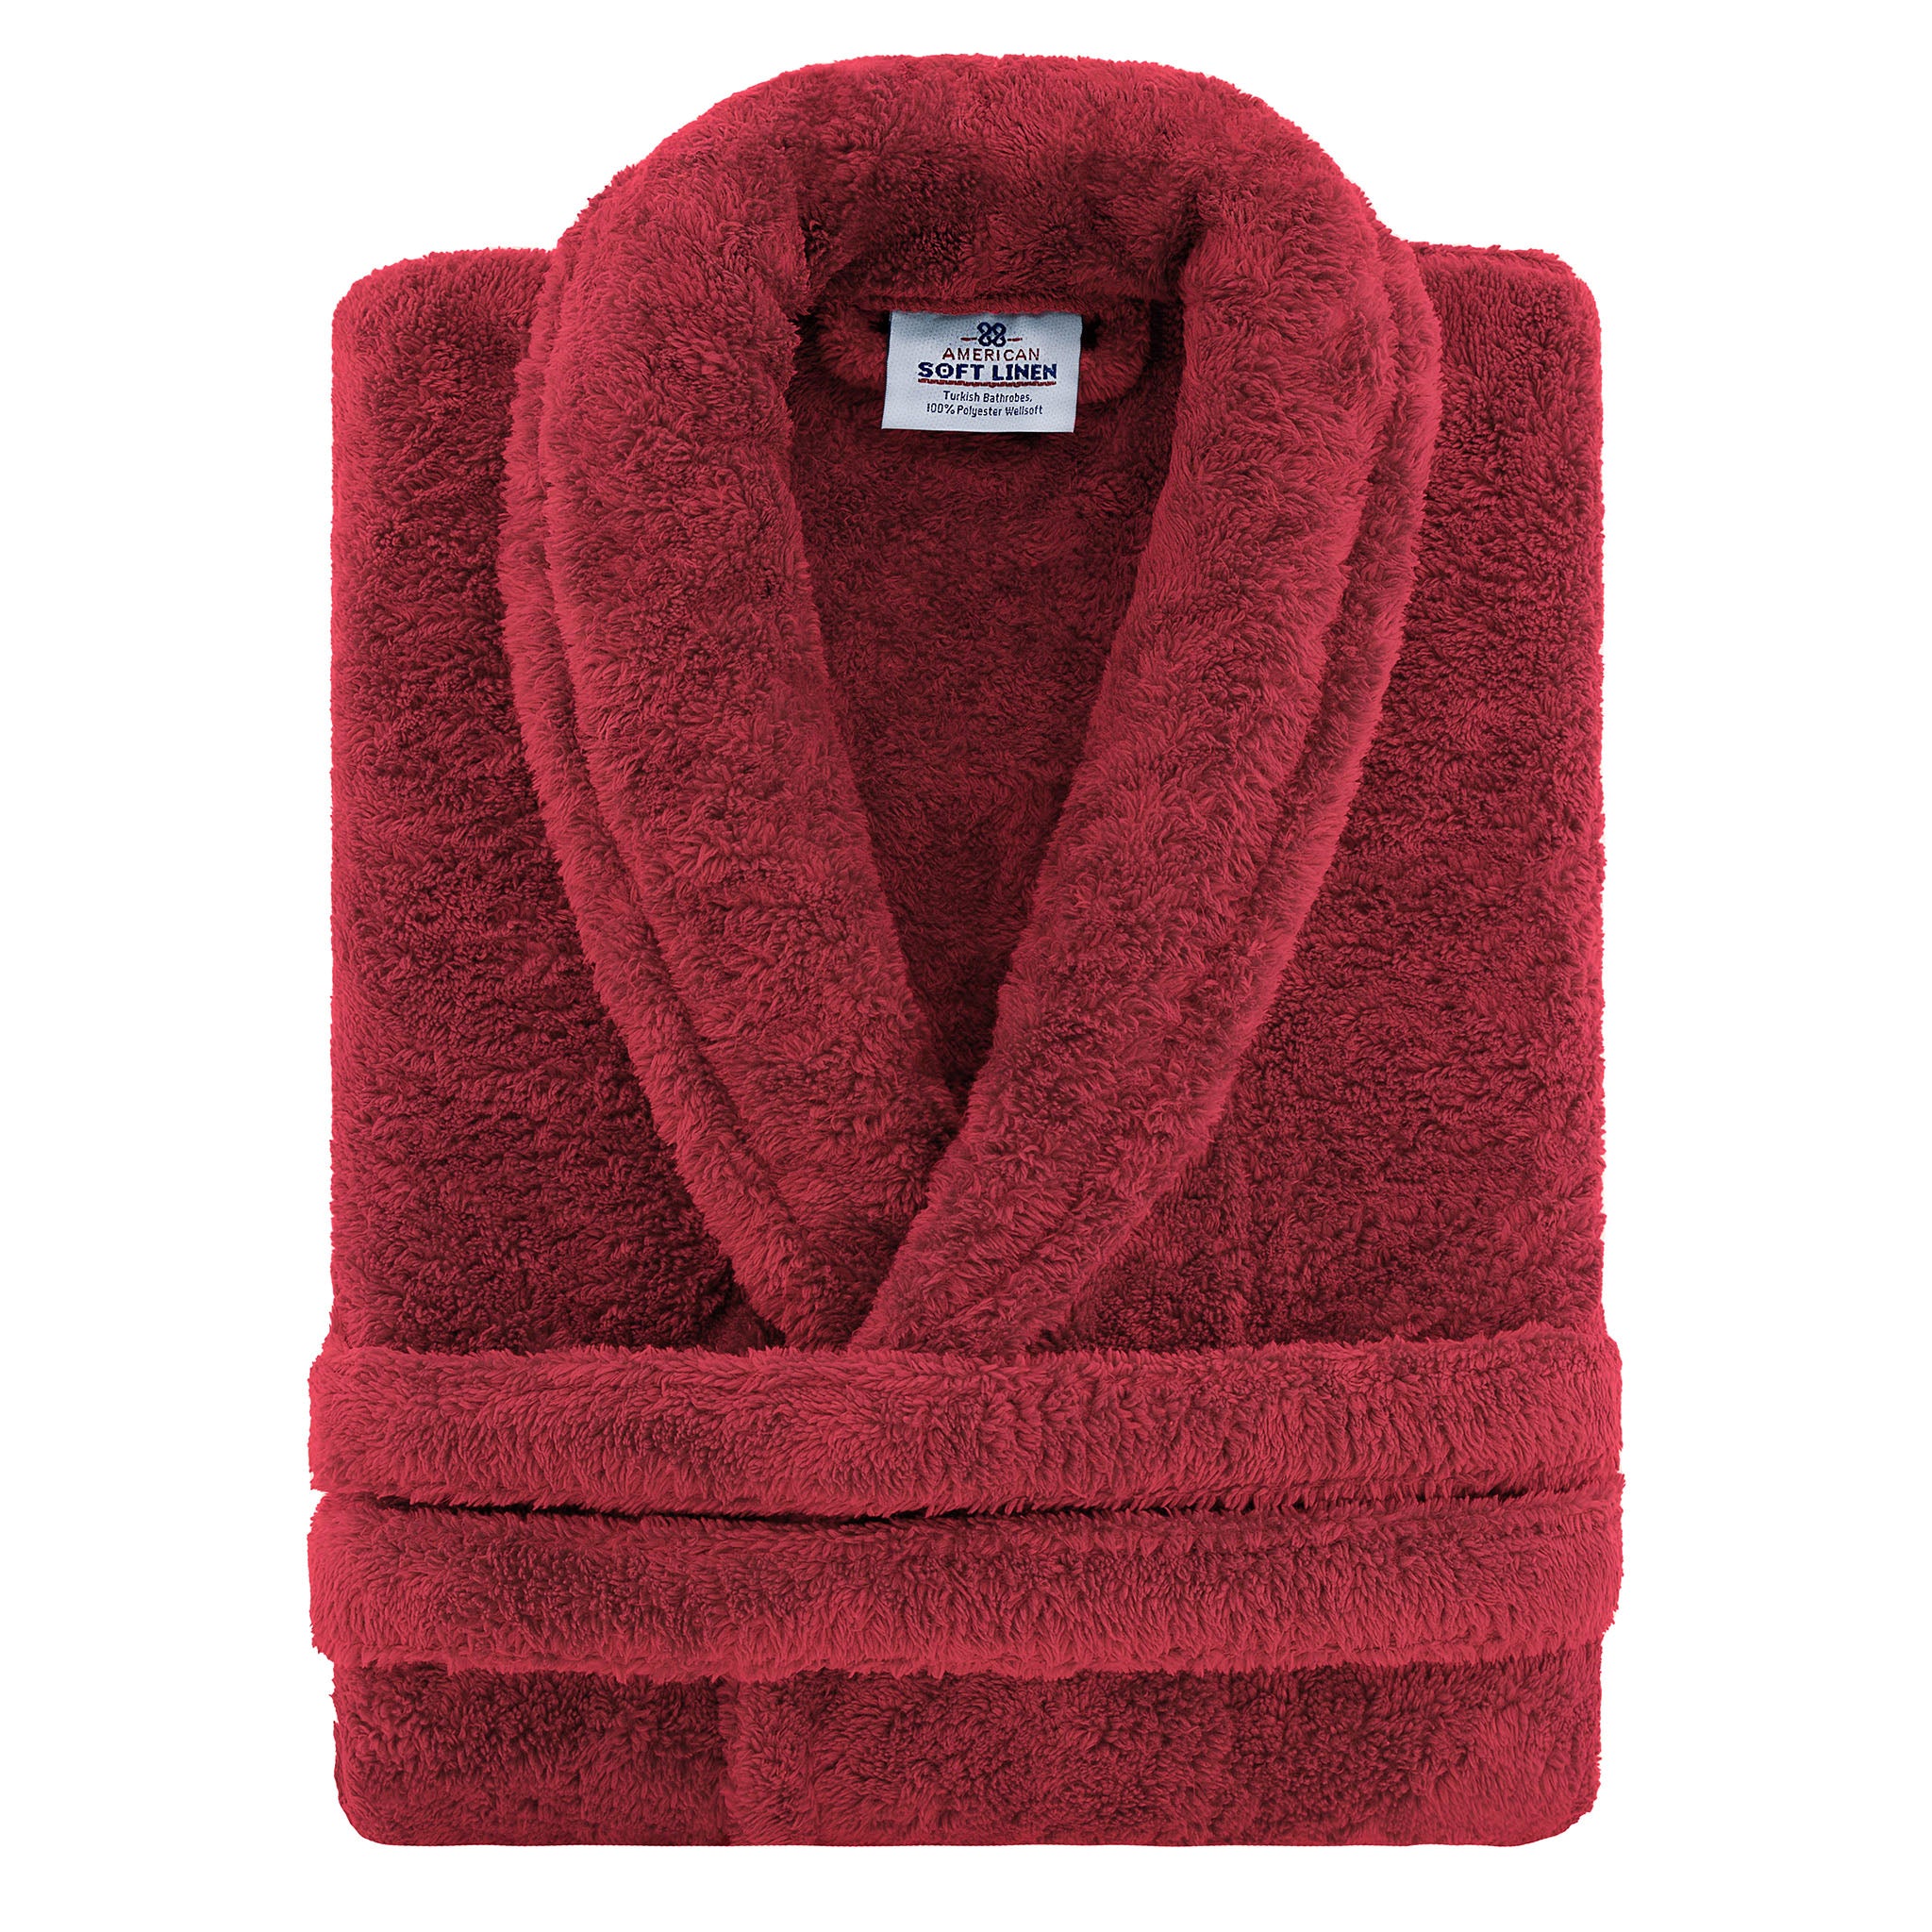 American Soft Linen Super Soft Absorbent and Fluffy Unisex Fleece Bathrobe -12 Set Case Pack -XL-XXL-Bordeaux-red-3